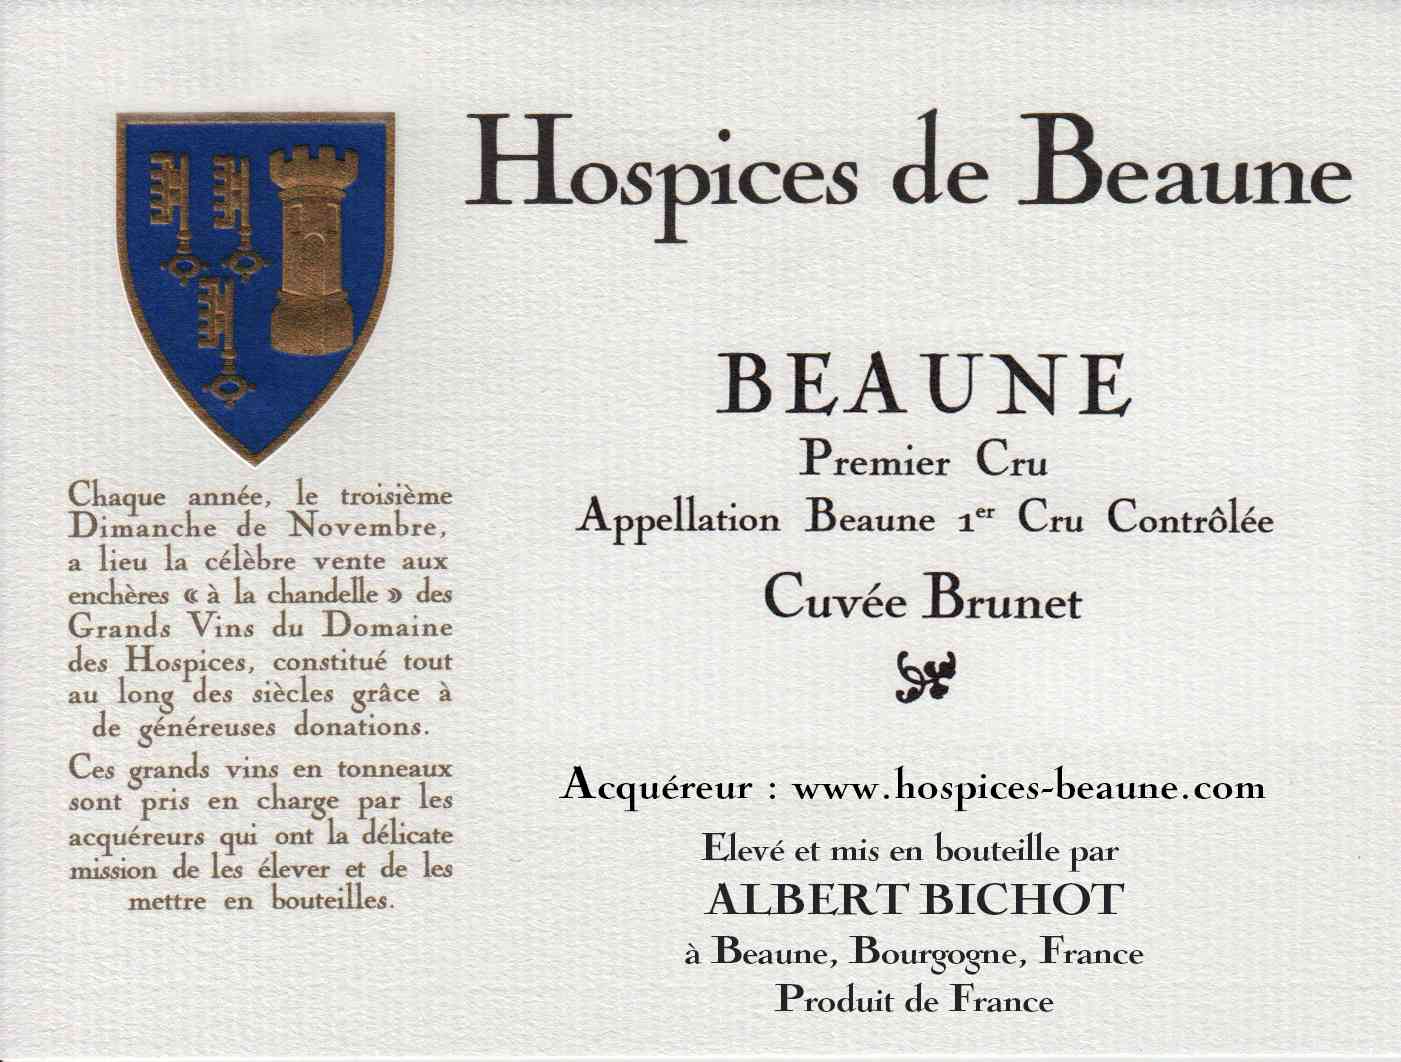 Encheres-auction-HospicesdeBeaune-AlbertBichot-Beaune1erCru-Cuvee-Brunet